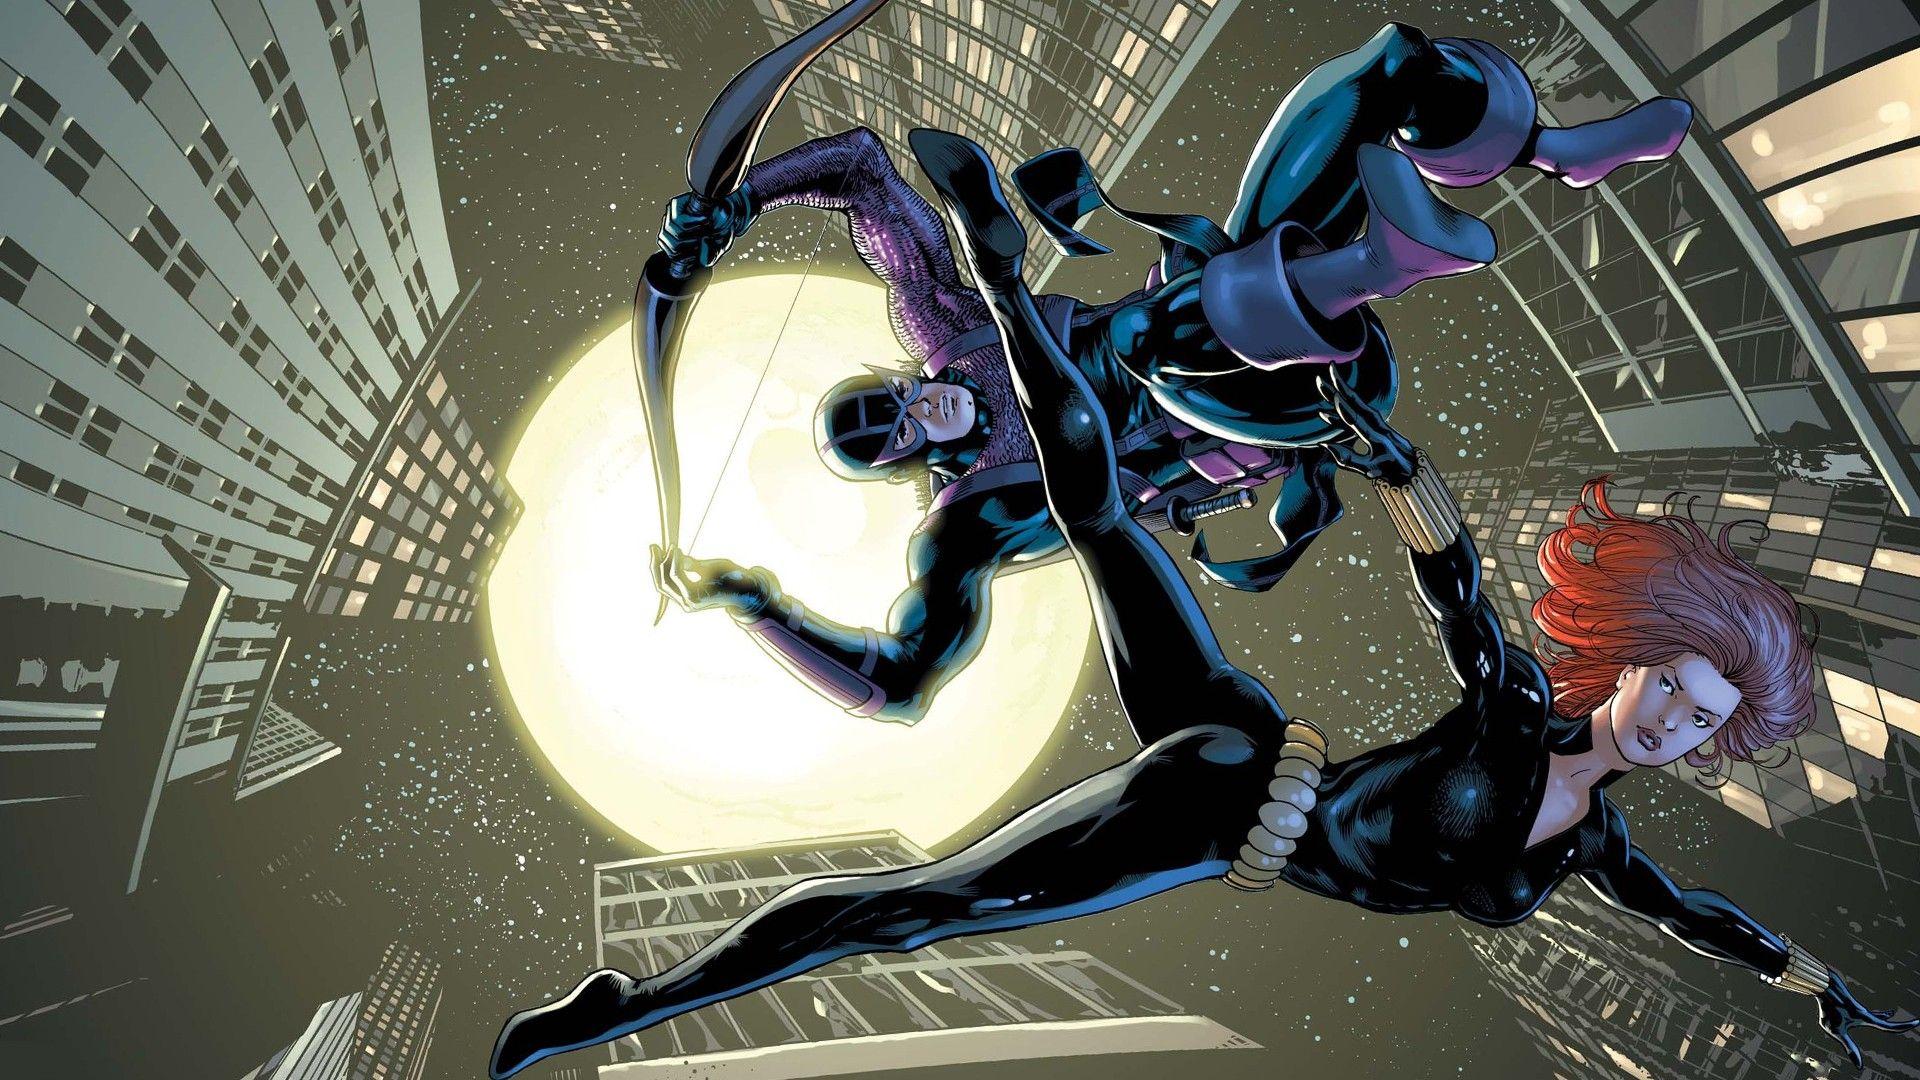 Hawkeye image Clintasha in the comics HD wallpaper and background